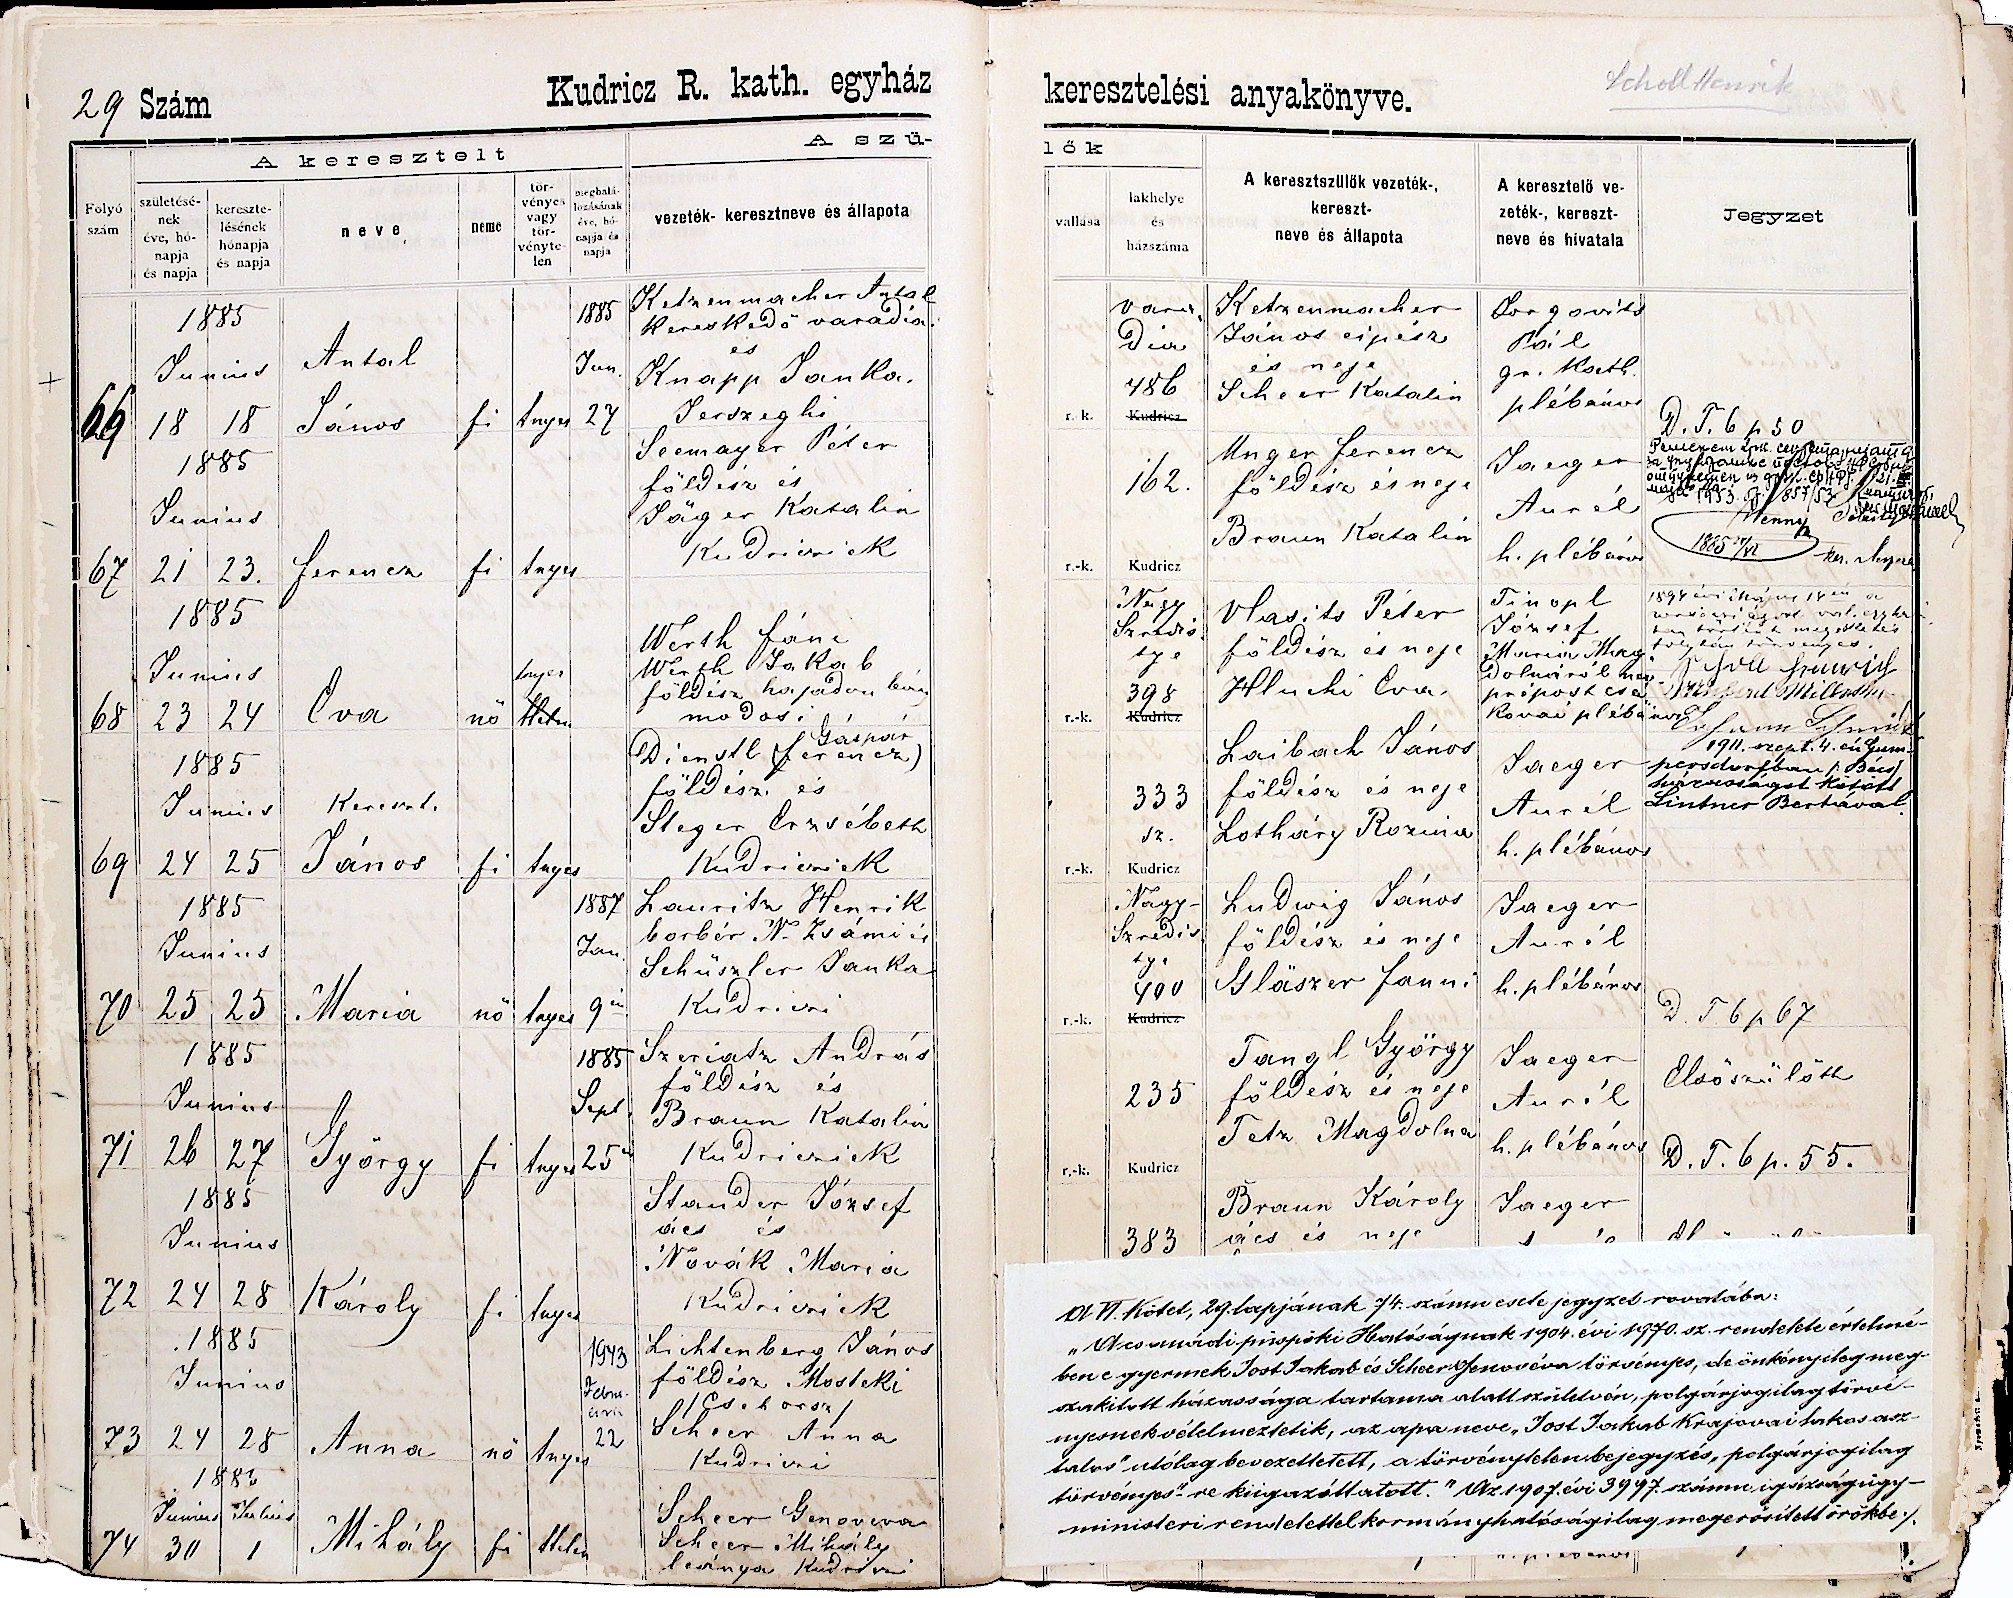 images/church_records/BIRTHS/1884-1899B/1885/029